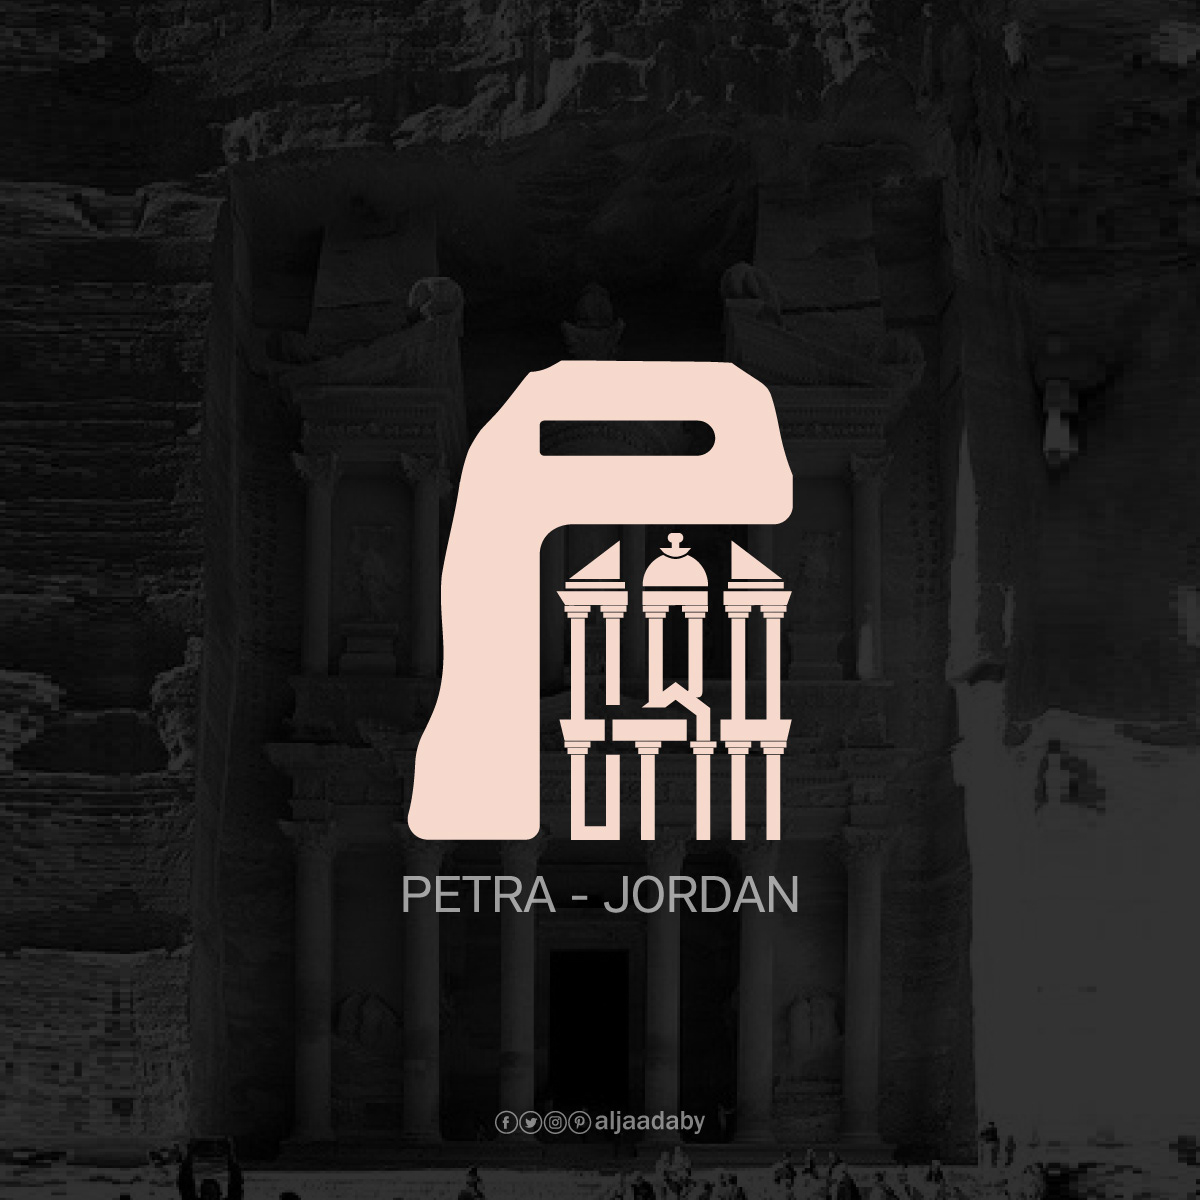 Typographic city logos based on their famous landmarks - Petra